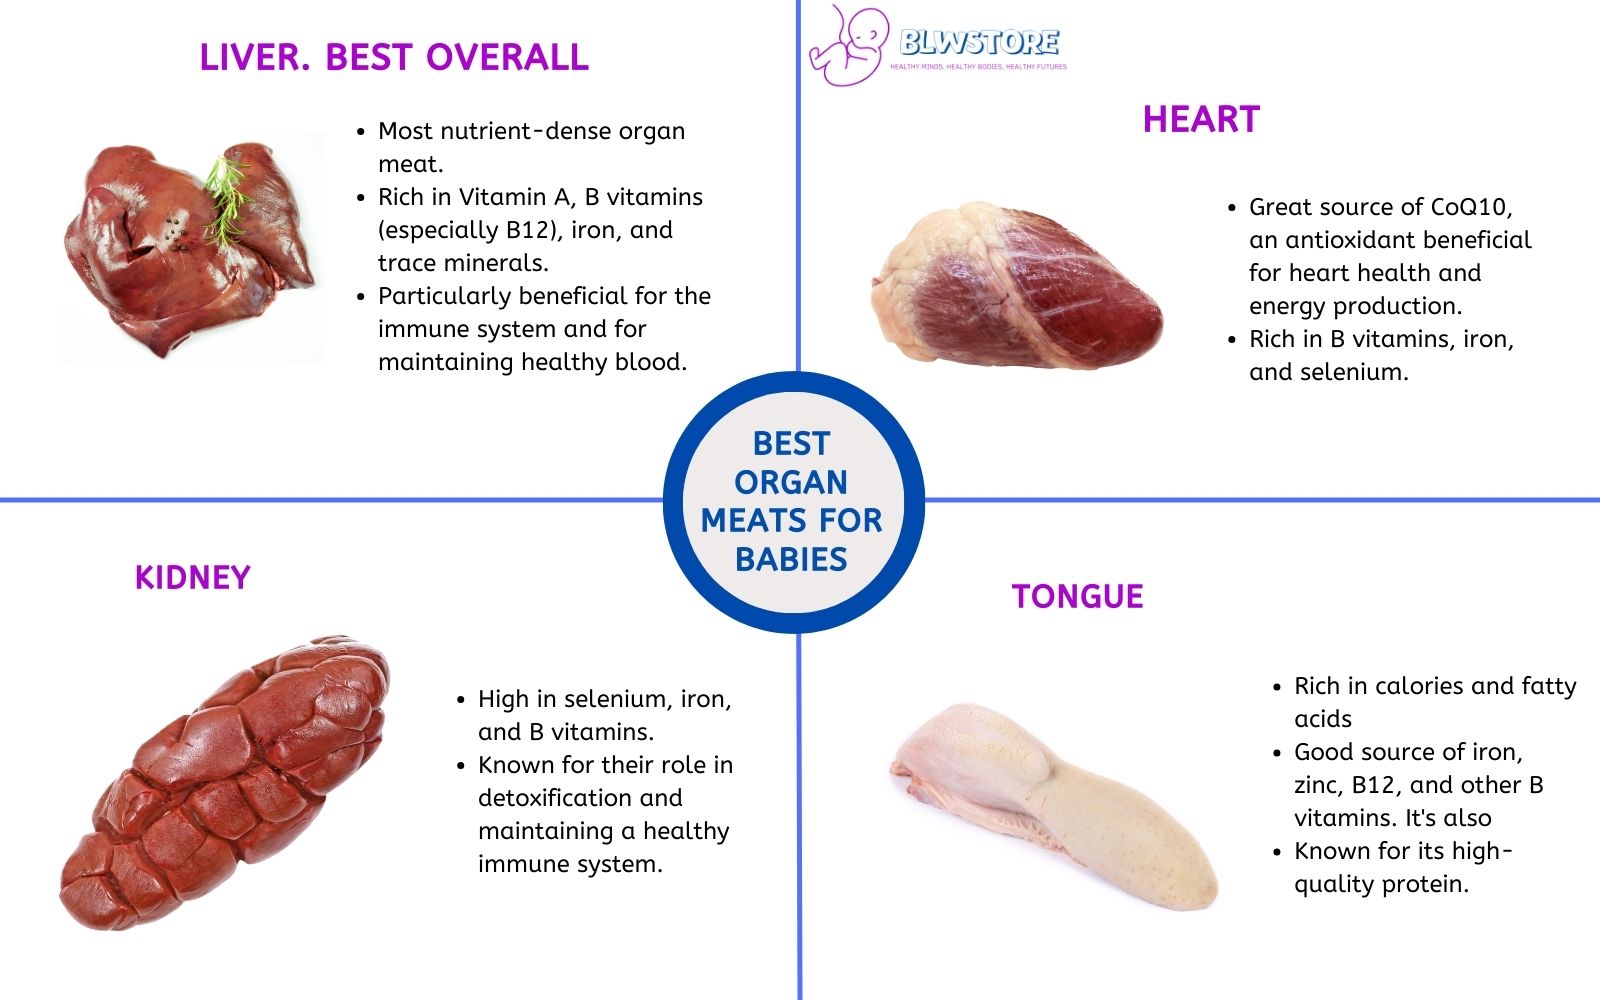 Best Organ Meats for Babies